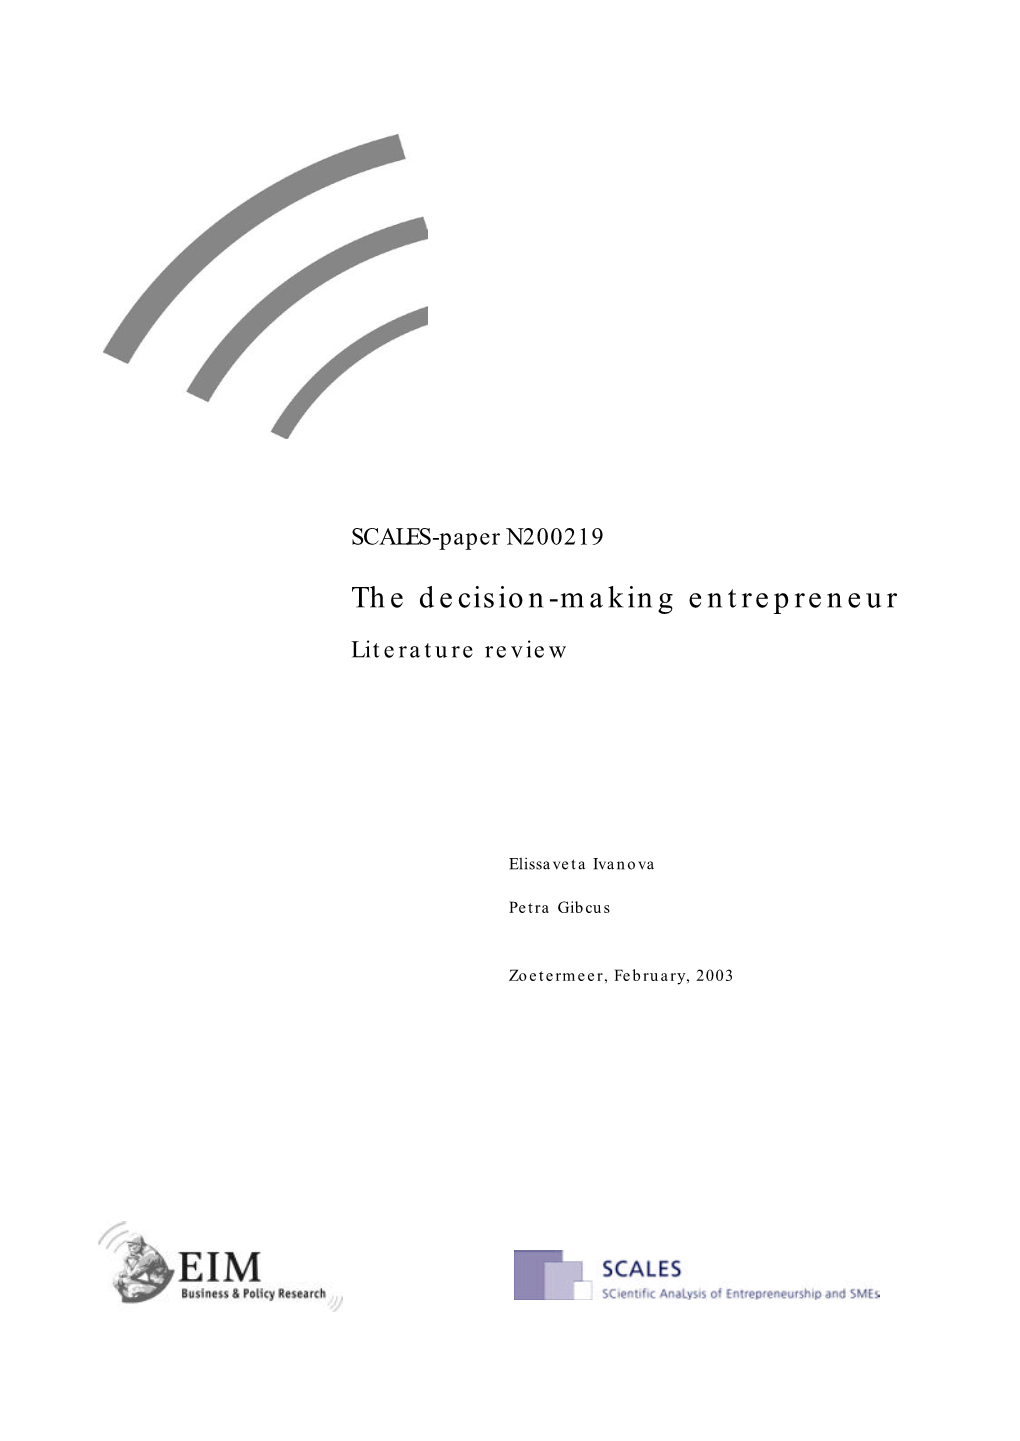 The Decision-Making Entrepreneur. Literature Review